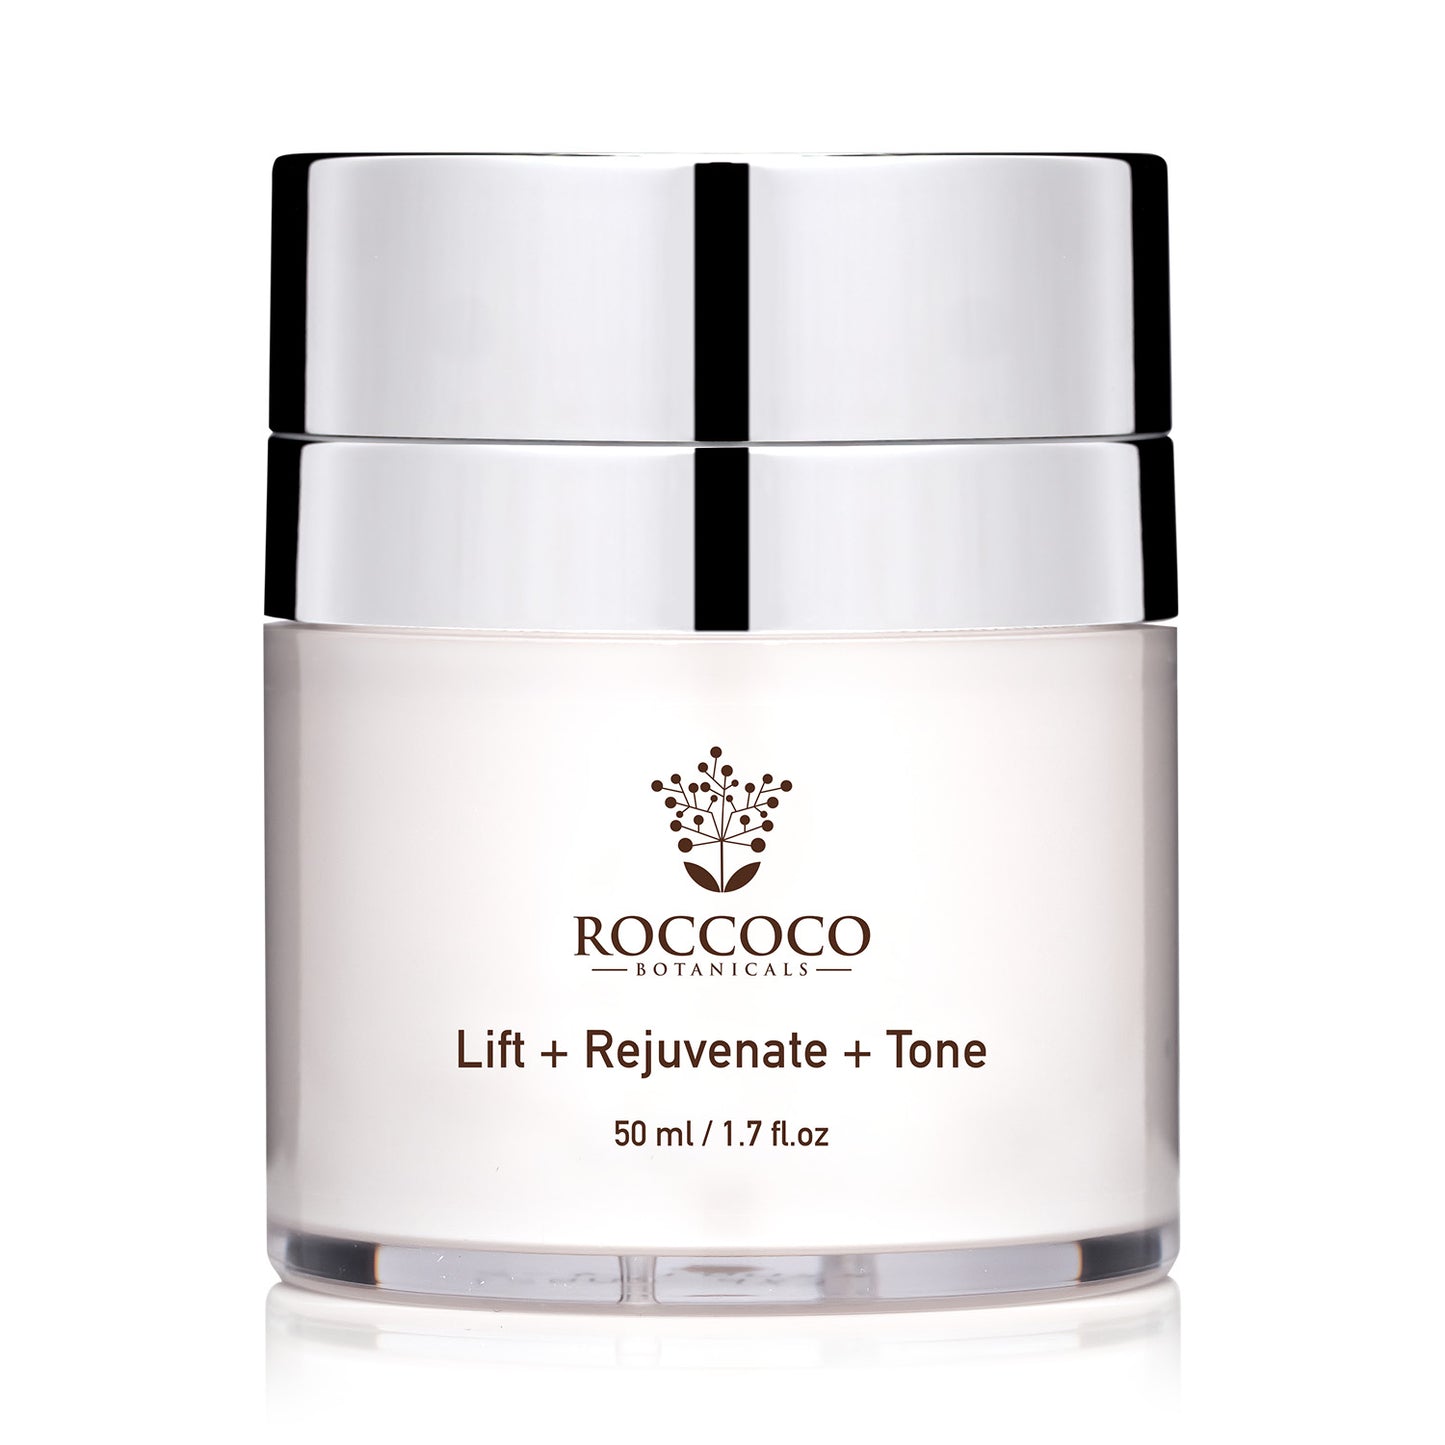 Roccoco Botanicals LRT Lift + Rejuvenate + Tone